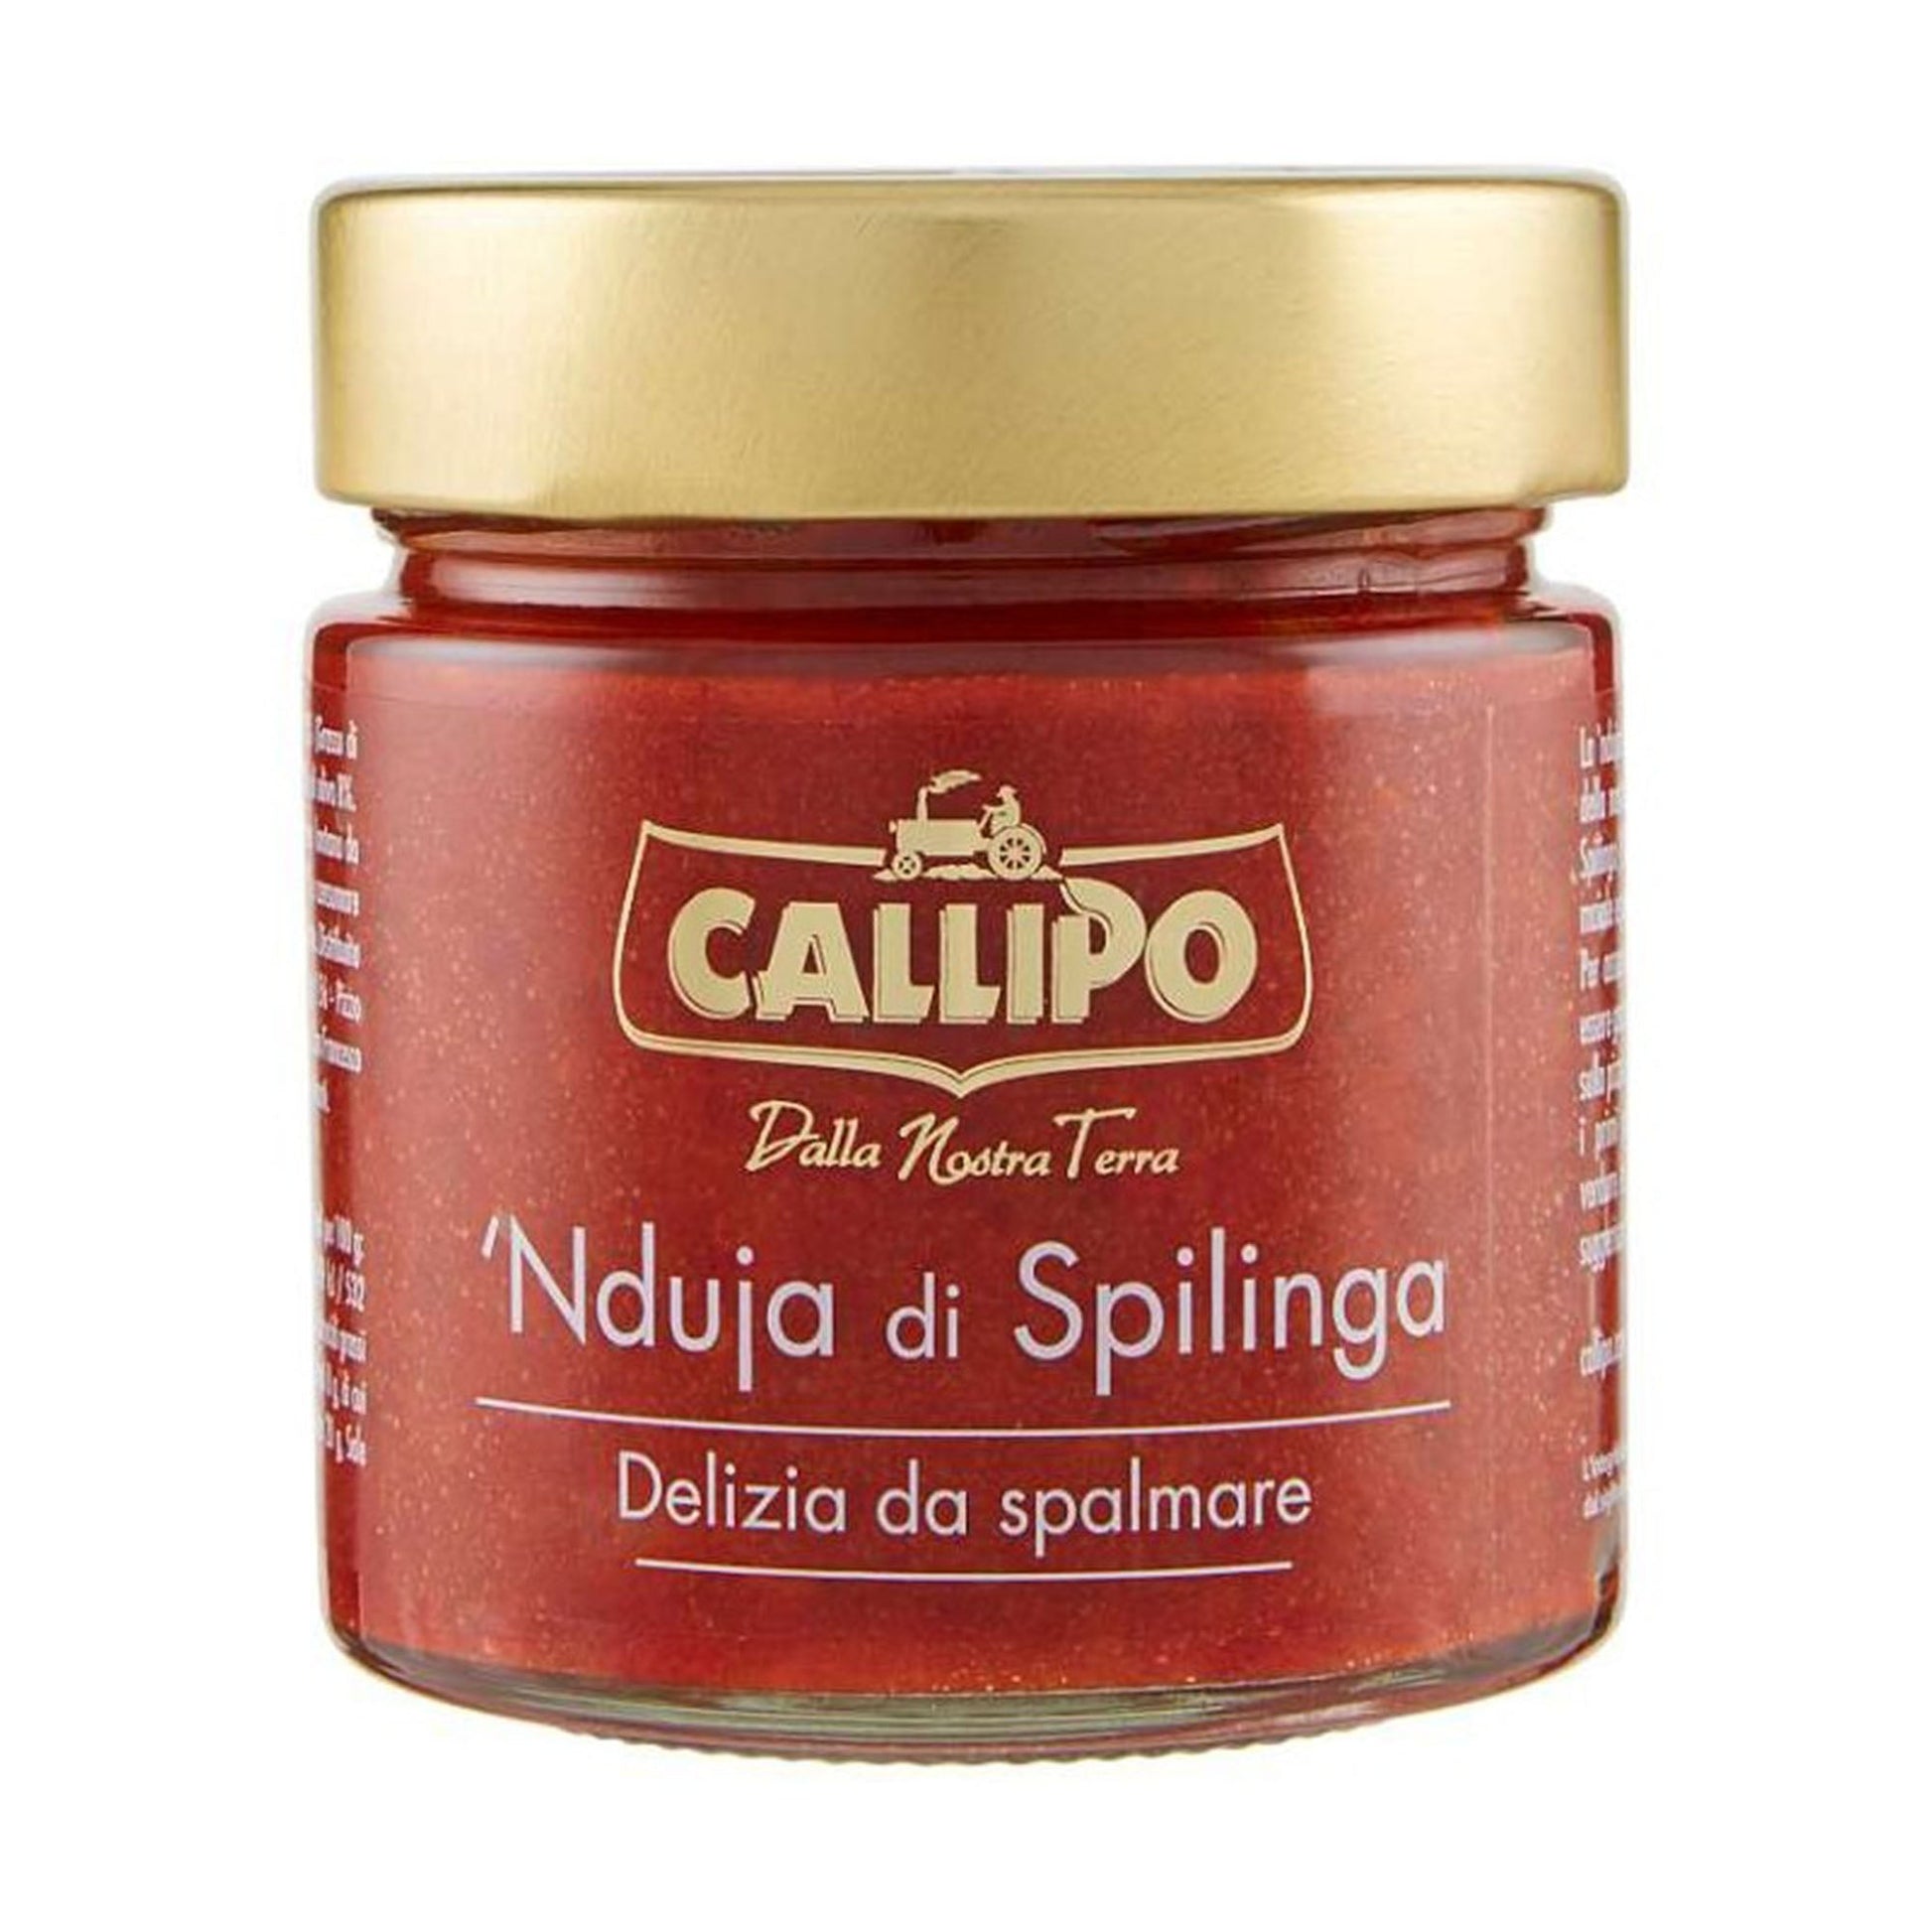 Callipo Nduja Di Spilinga 190G